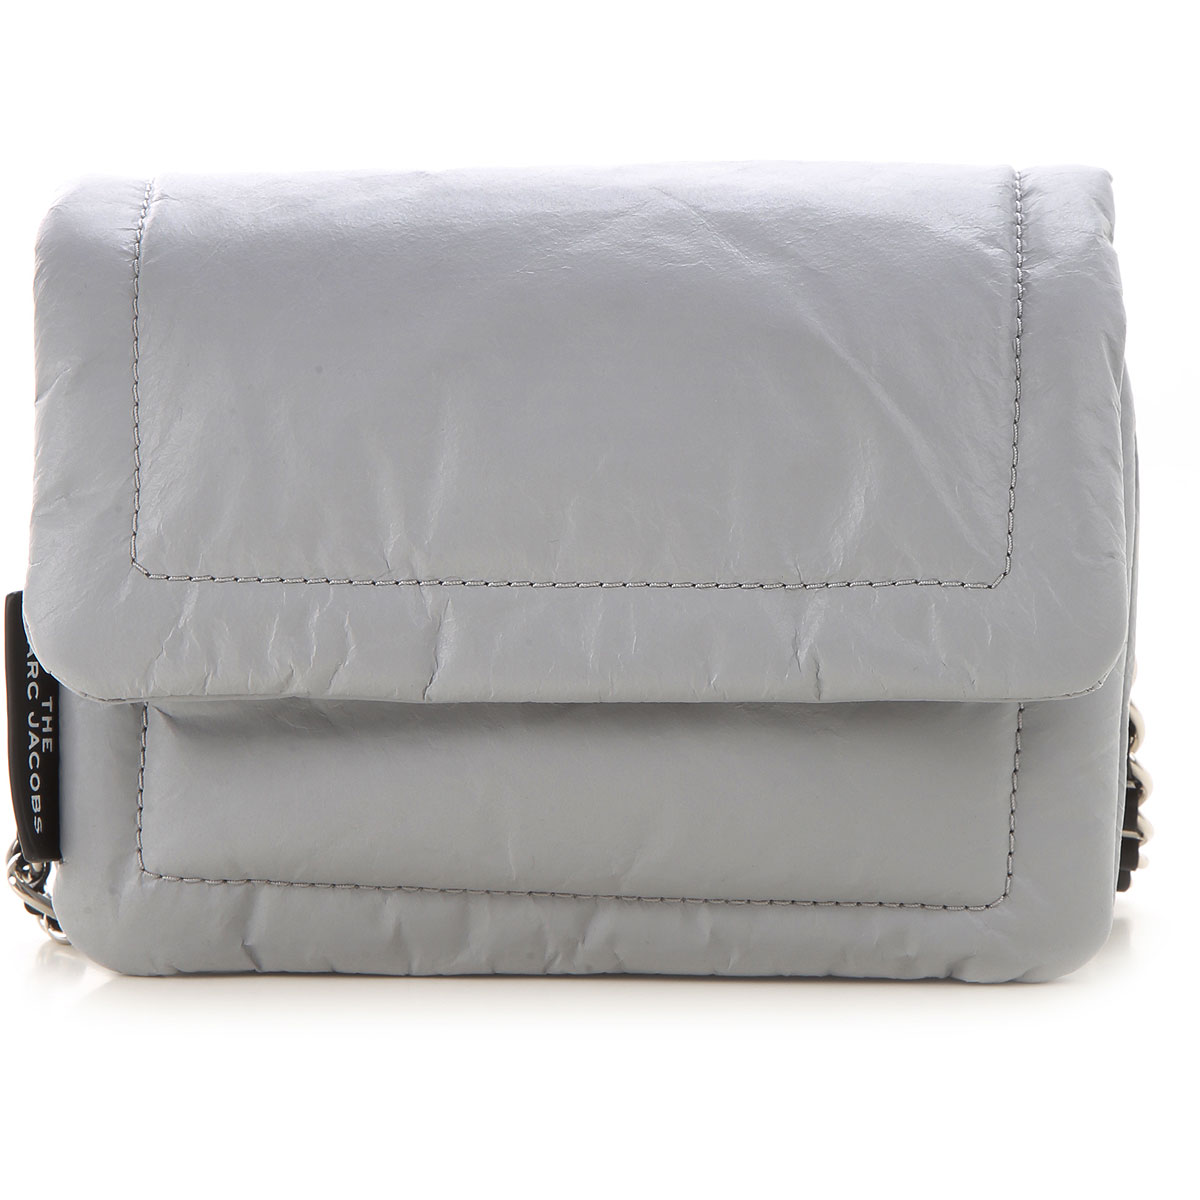 Handbags Marc Jacobs, Style code: m0015773-536-